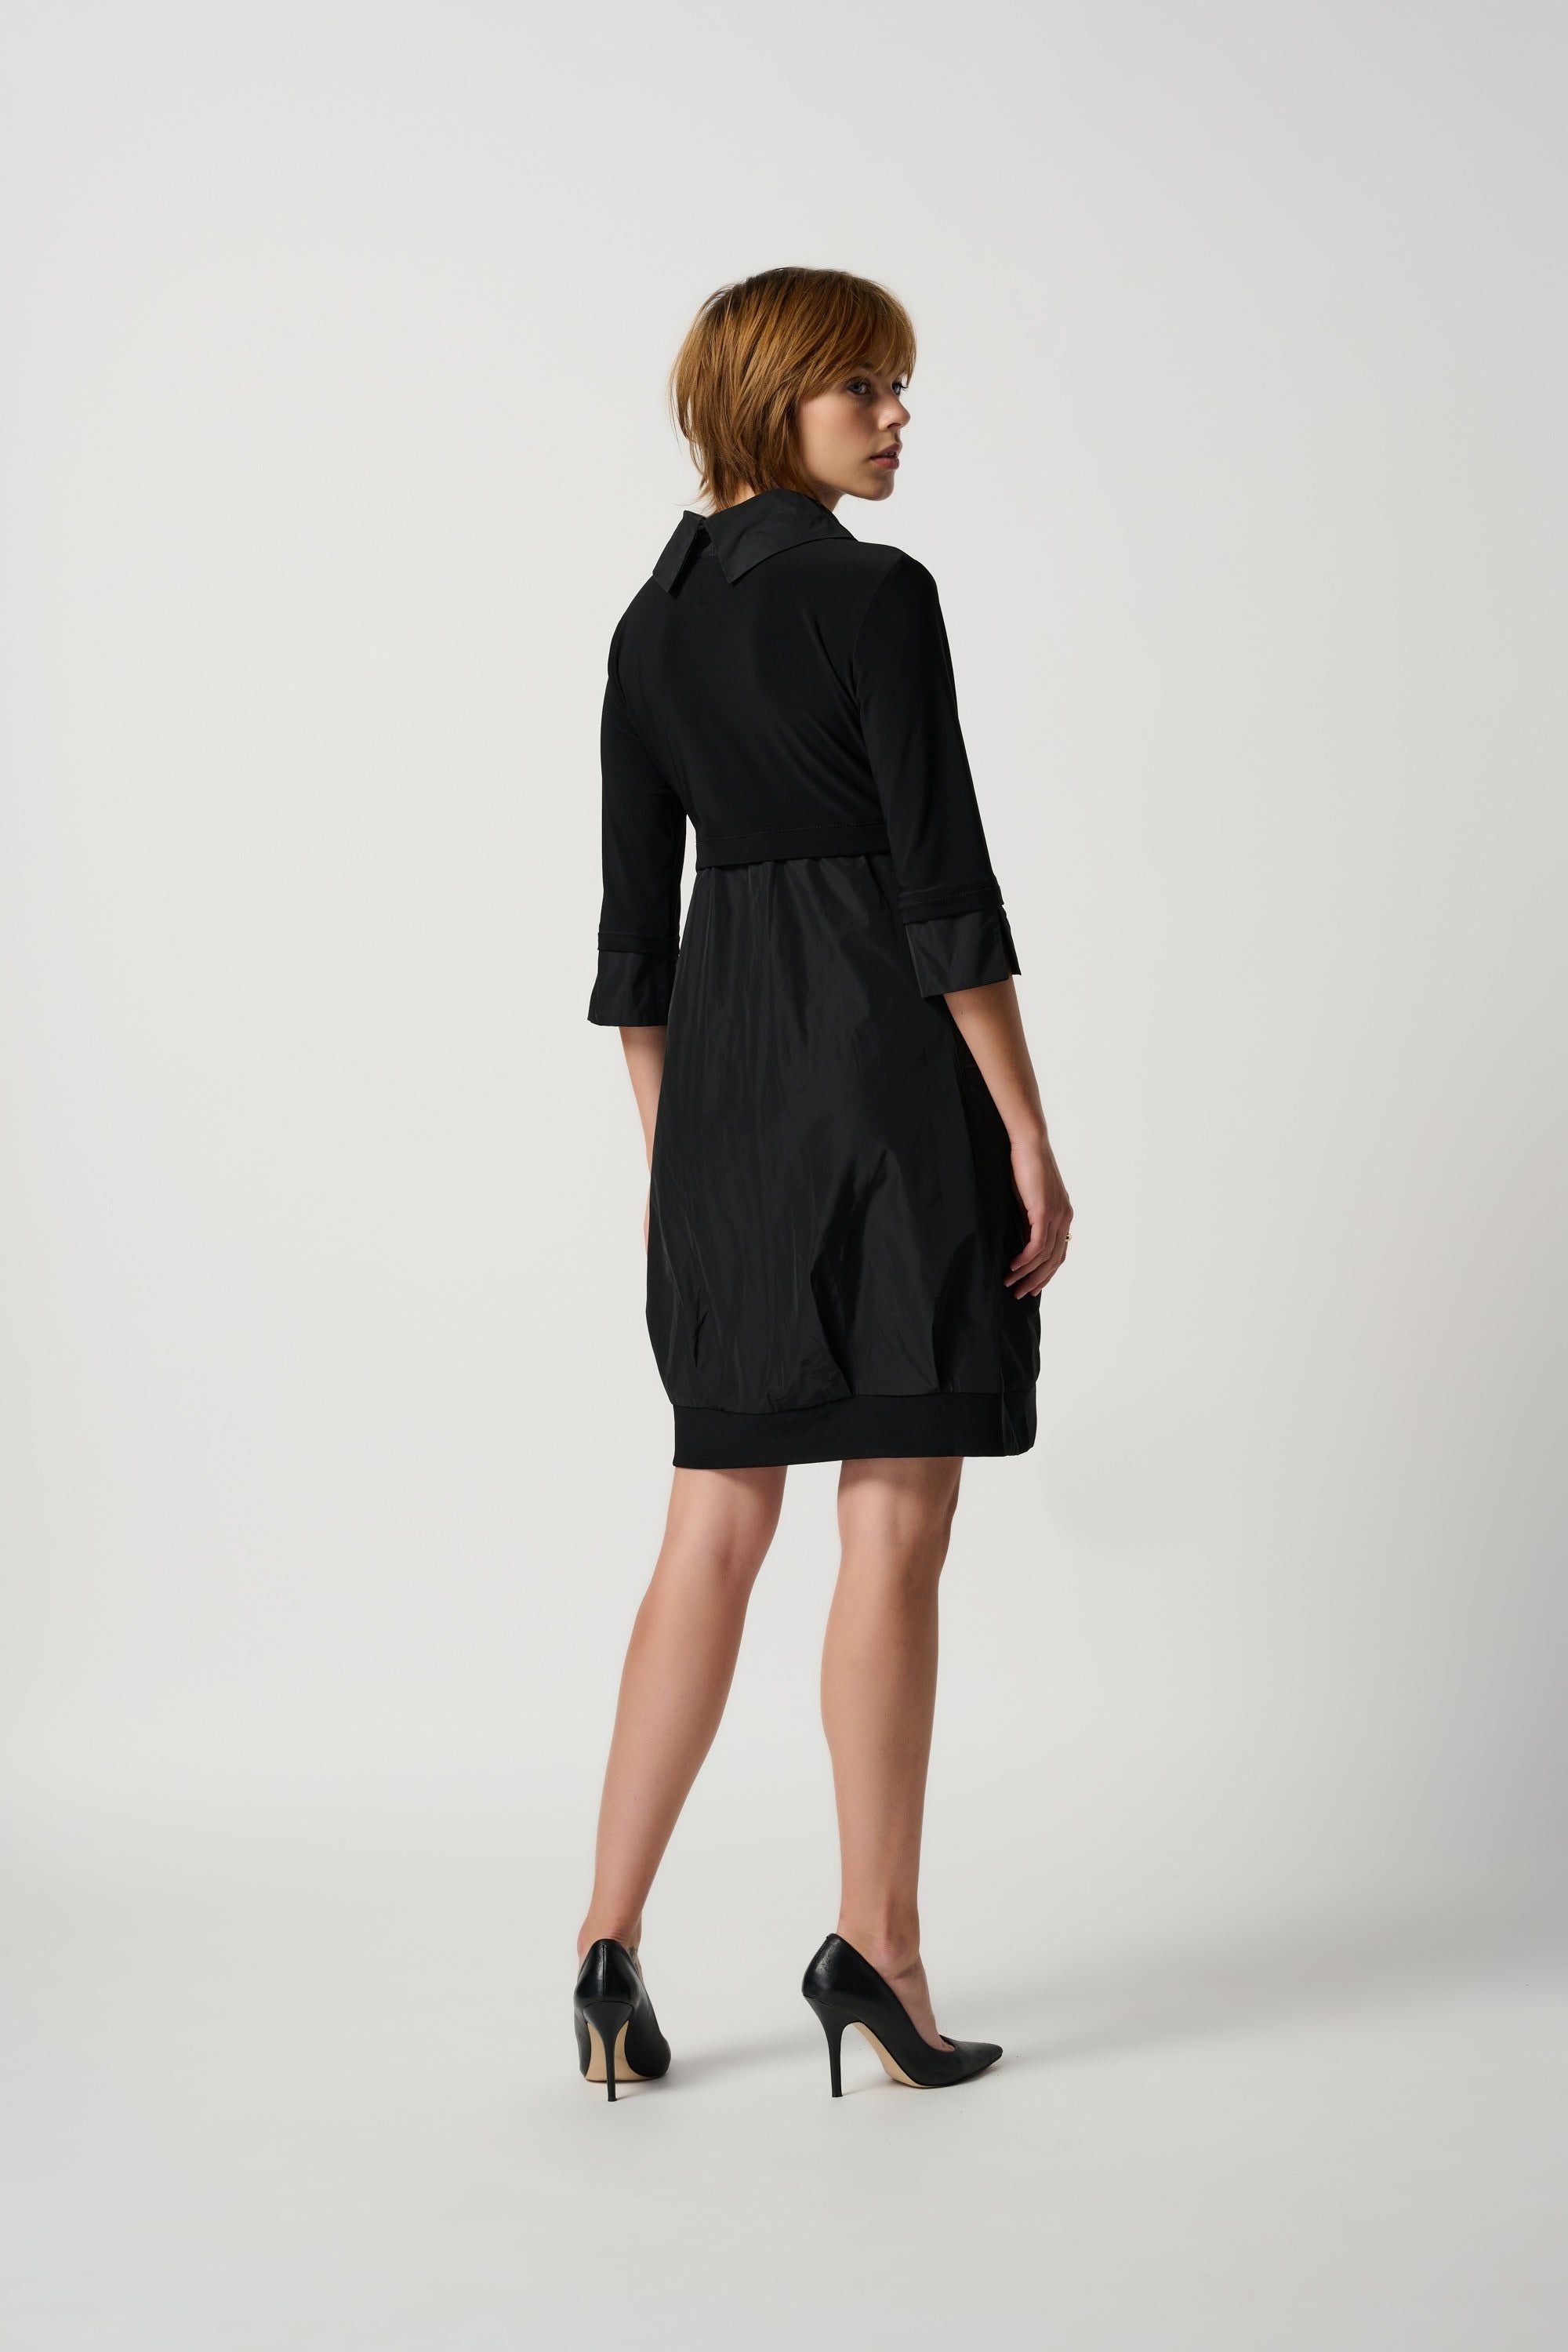 Joseph Ribkoff Miracle Dress - Style 173444TT, back, black